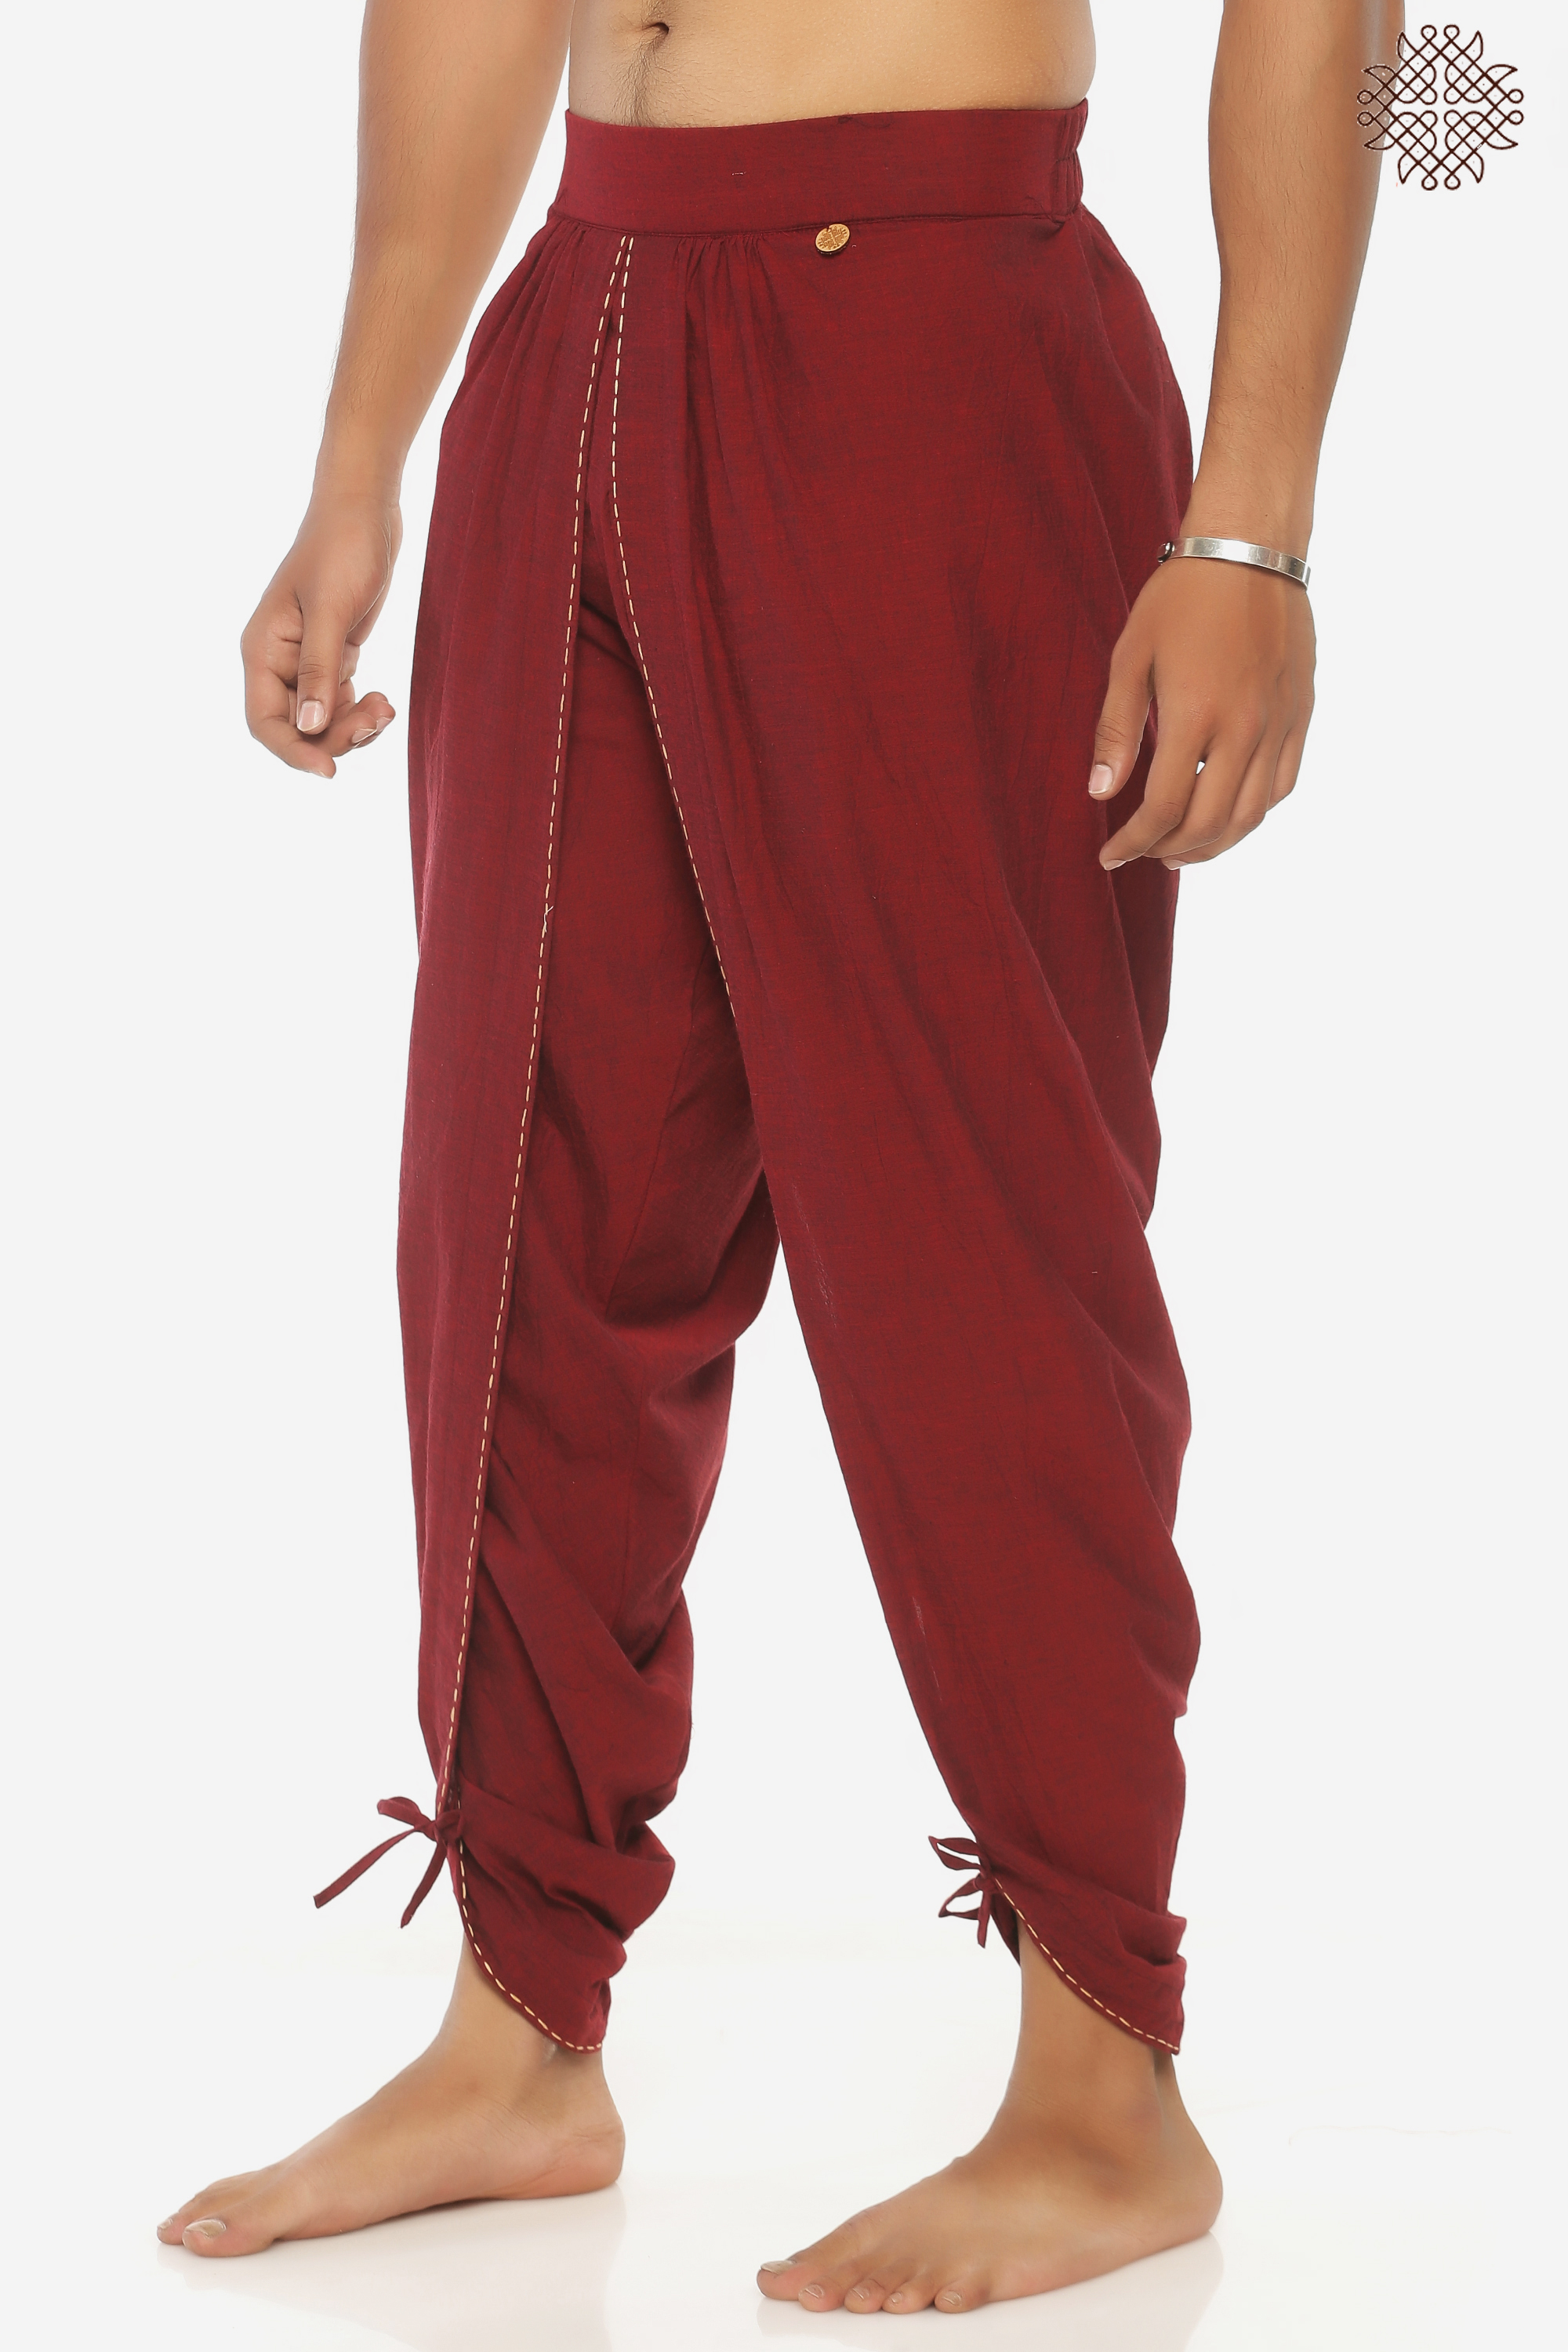 FabRasiya Women's Cotton Flared Kurta With Dhoti Pant (X-Small, Navy Blue)  : Amazon.in: Fashion